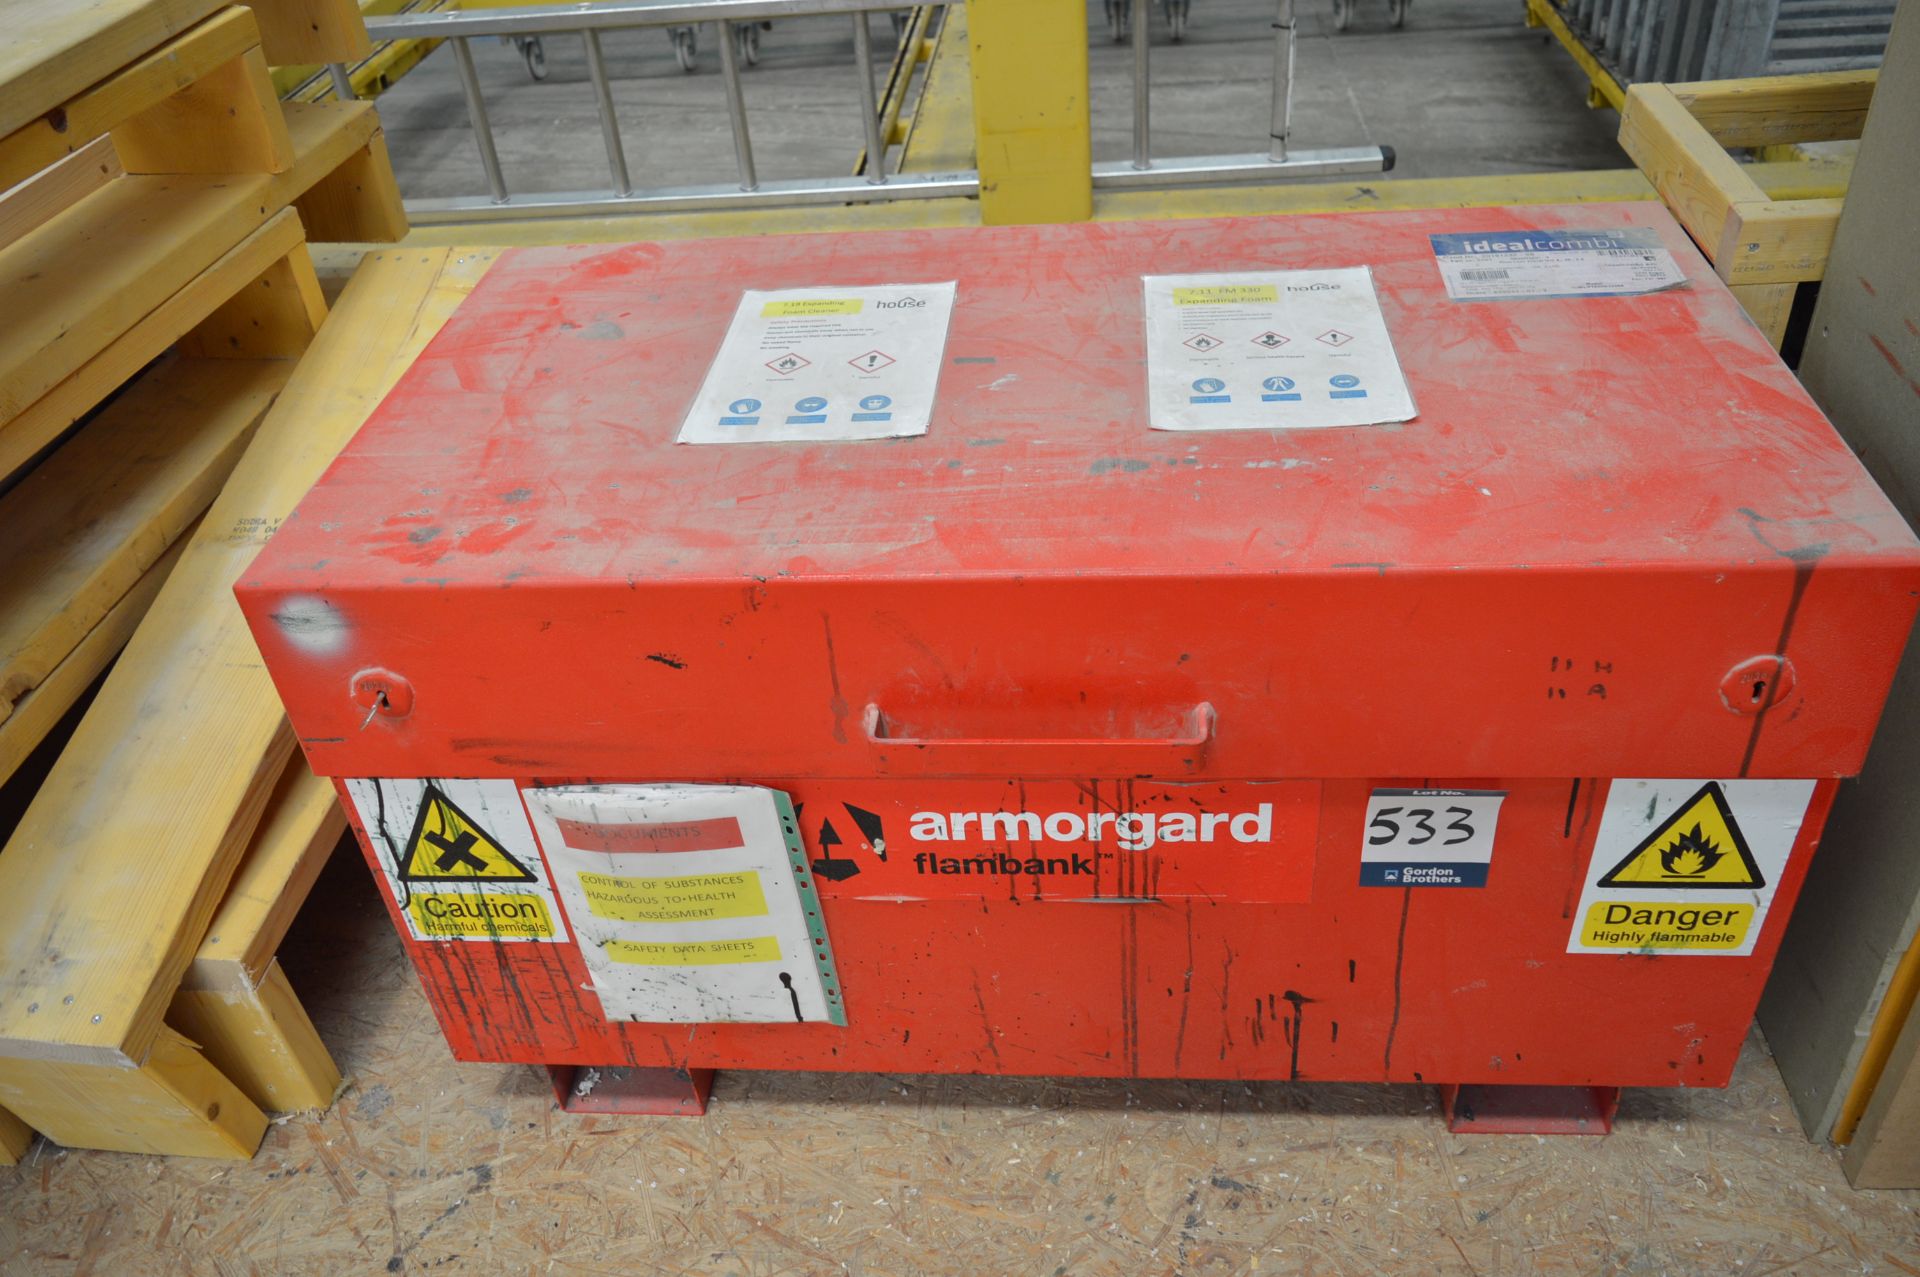 Armor Gard Flambank, flammable liquid storage container, 1200mm x 640mm x 700mm high